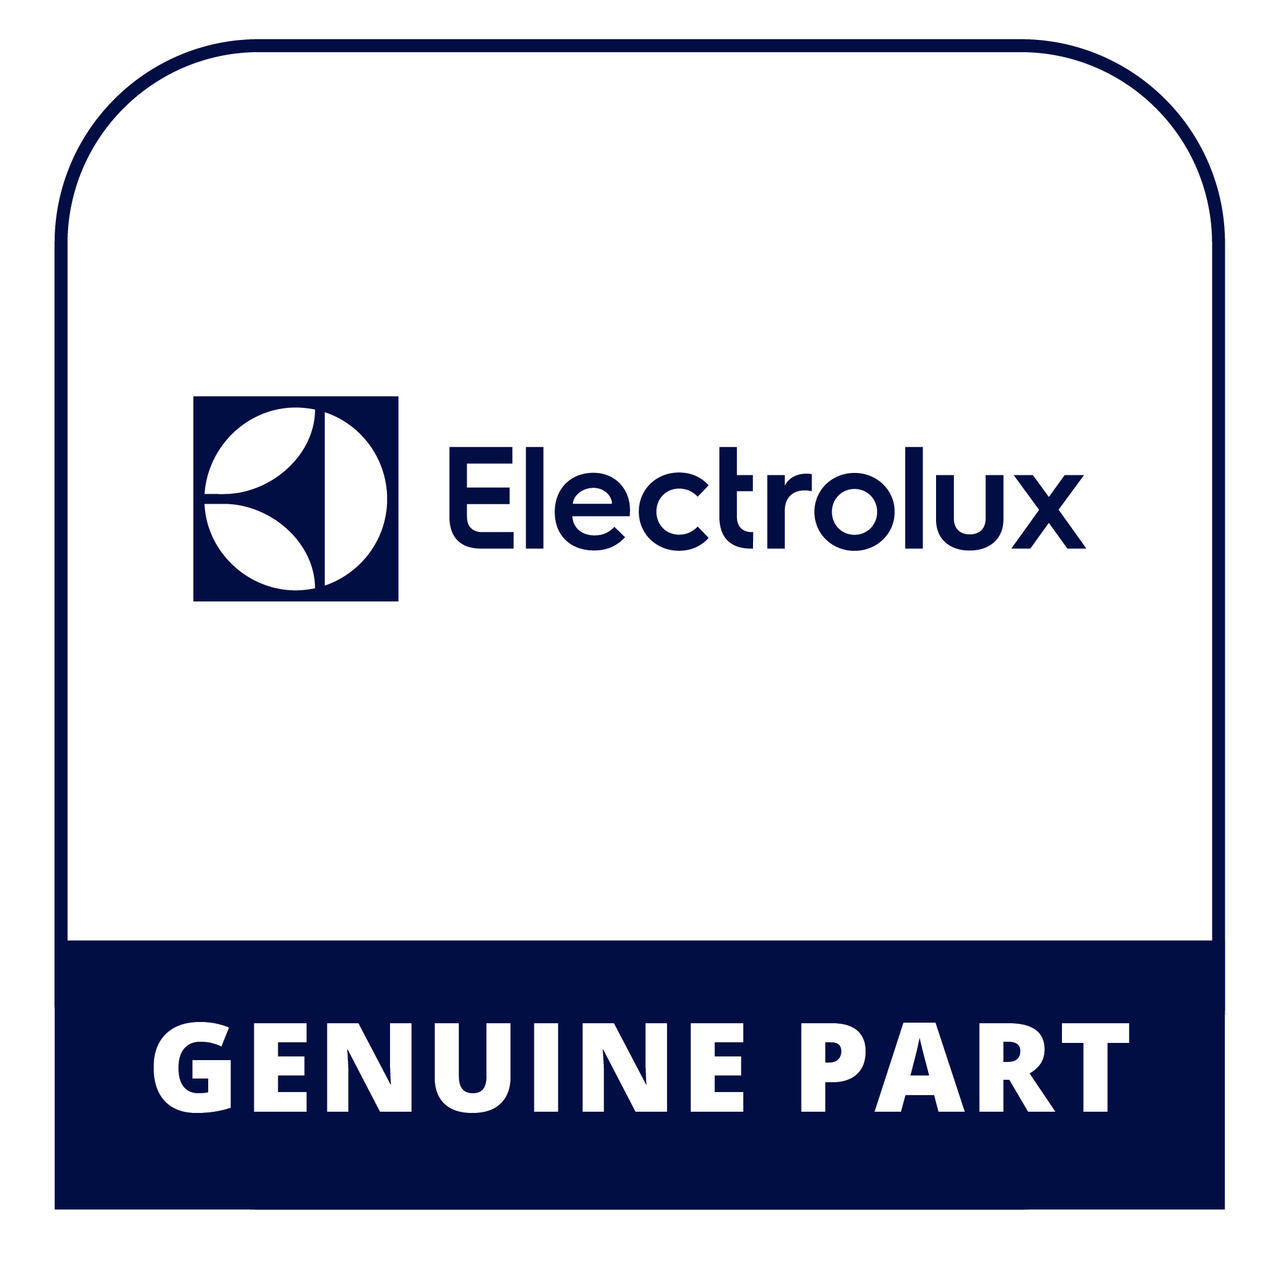 Frigidaire - Electrolux 241946811 Cover - Genuine Electrolux Part